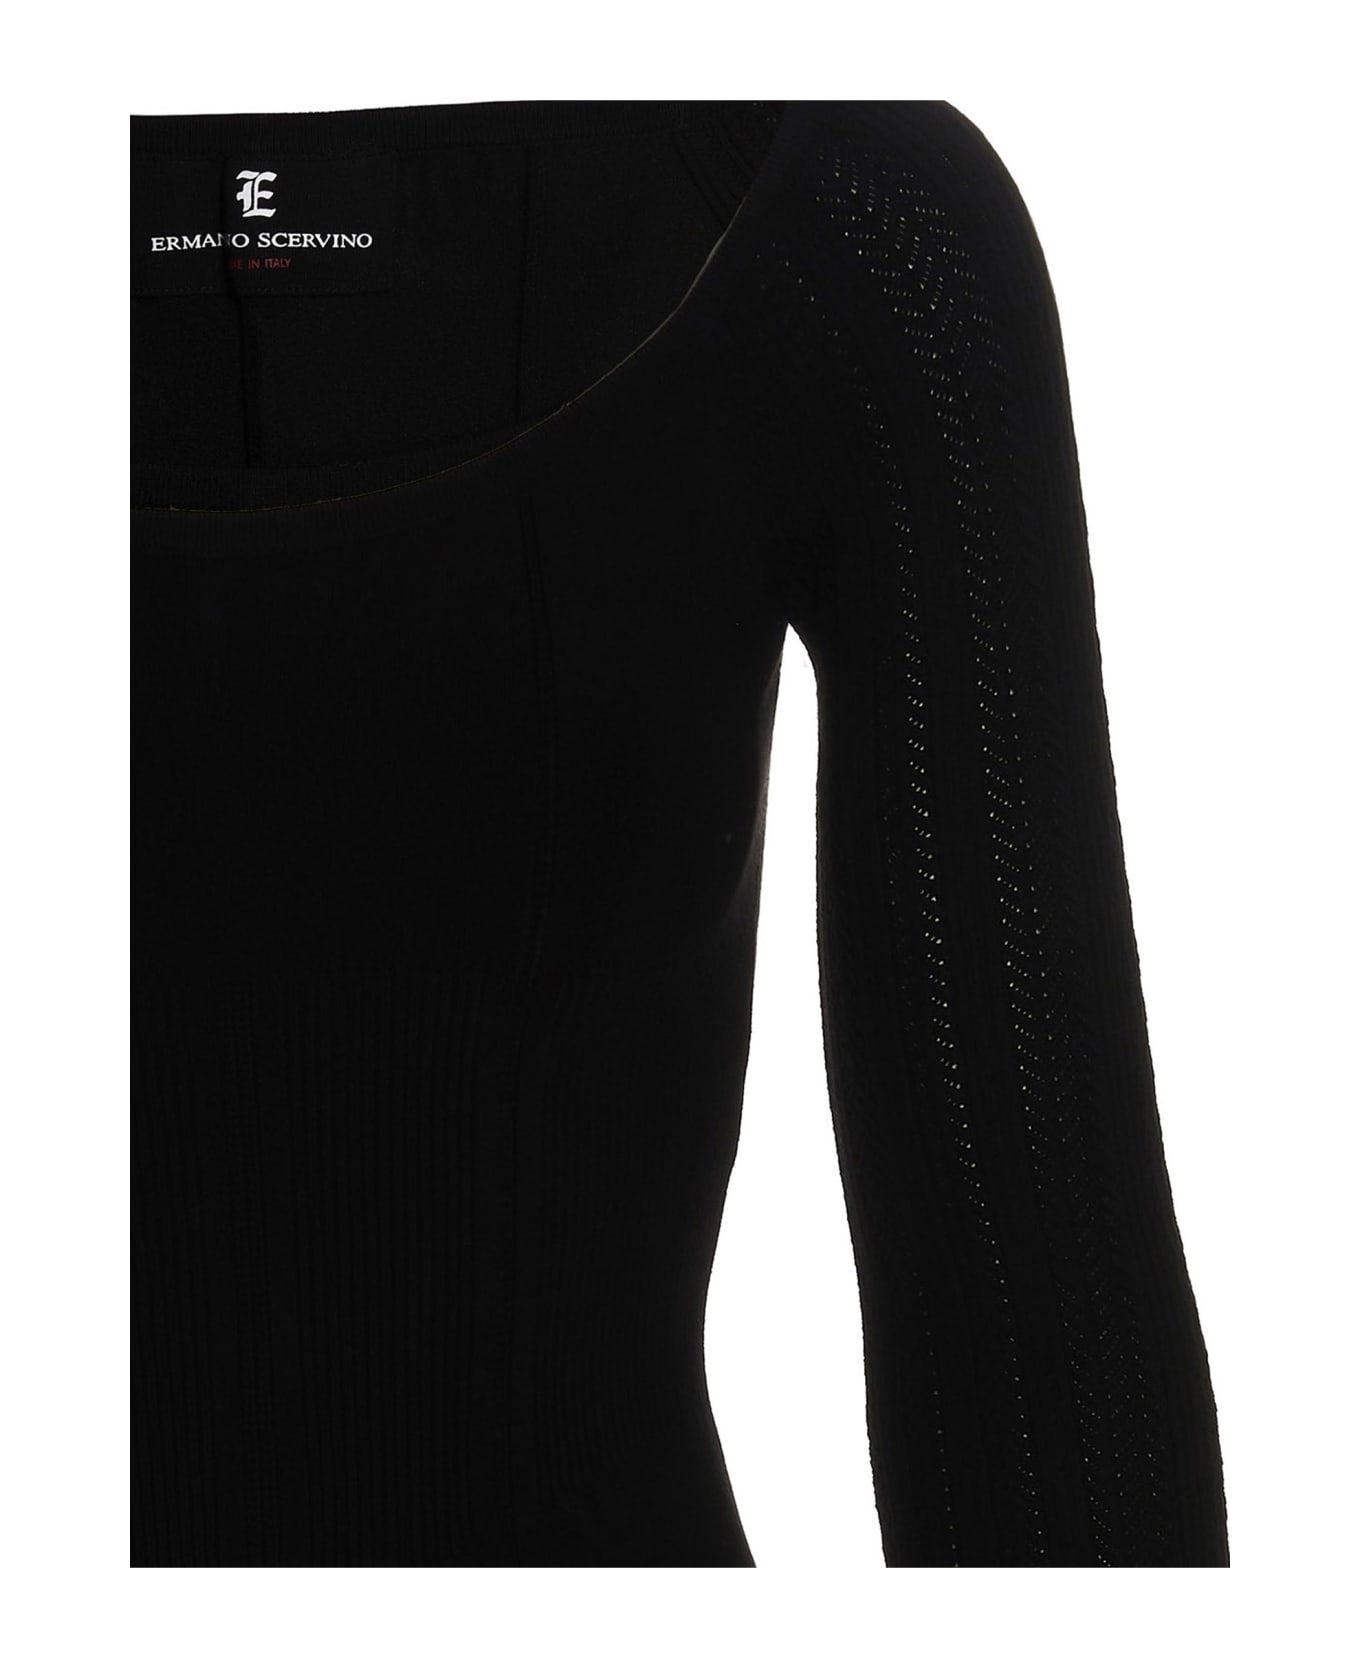 Ermanno Scervino Knitted Midi Dress - Black  